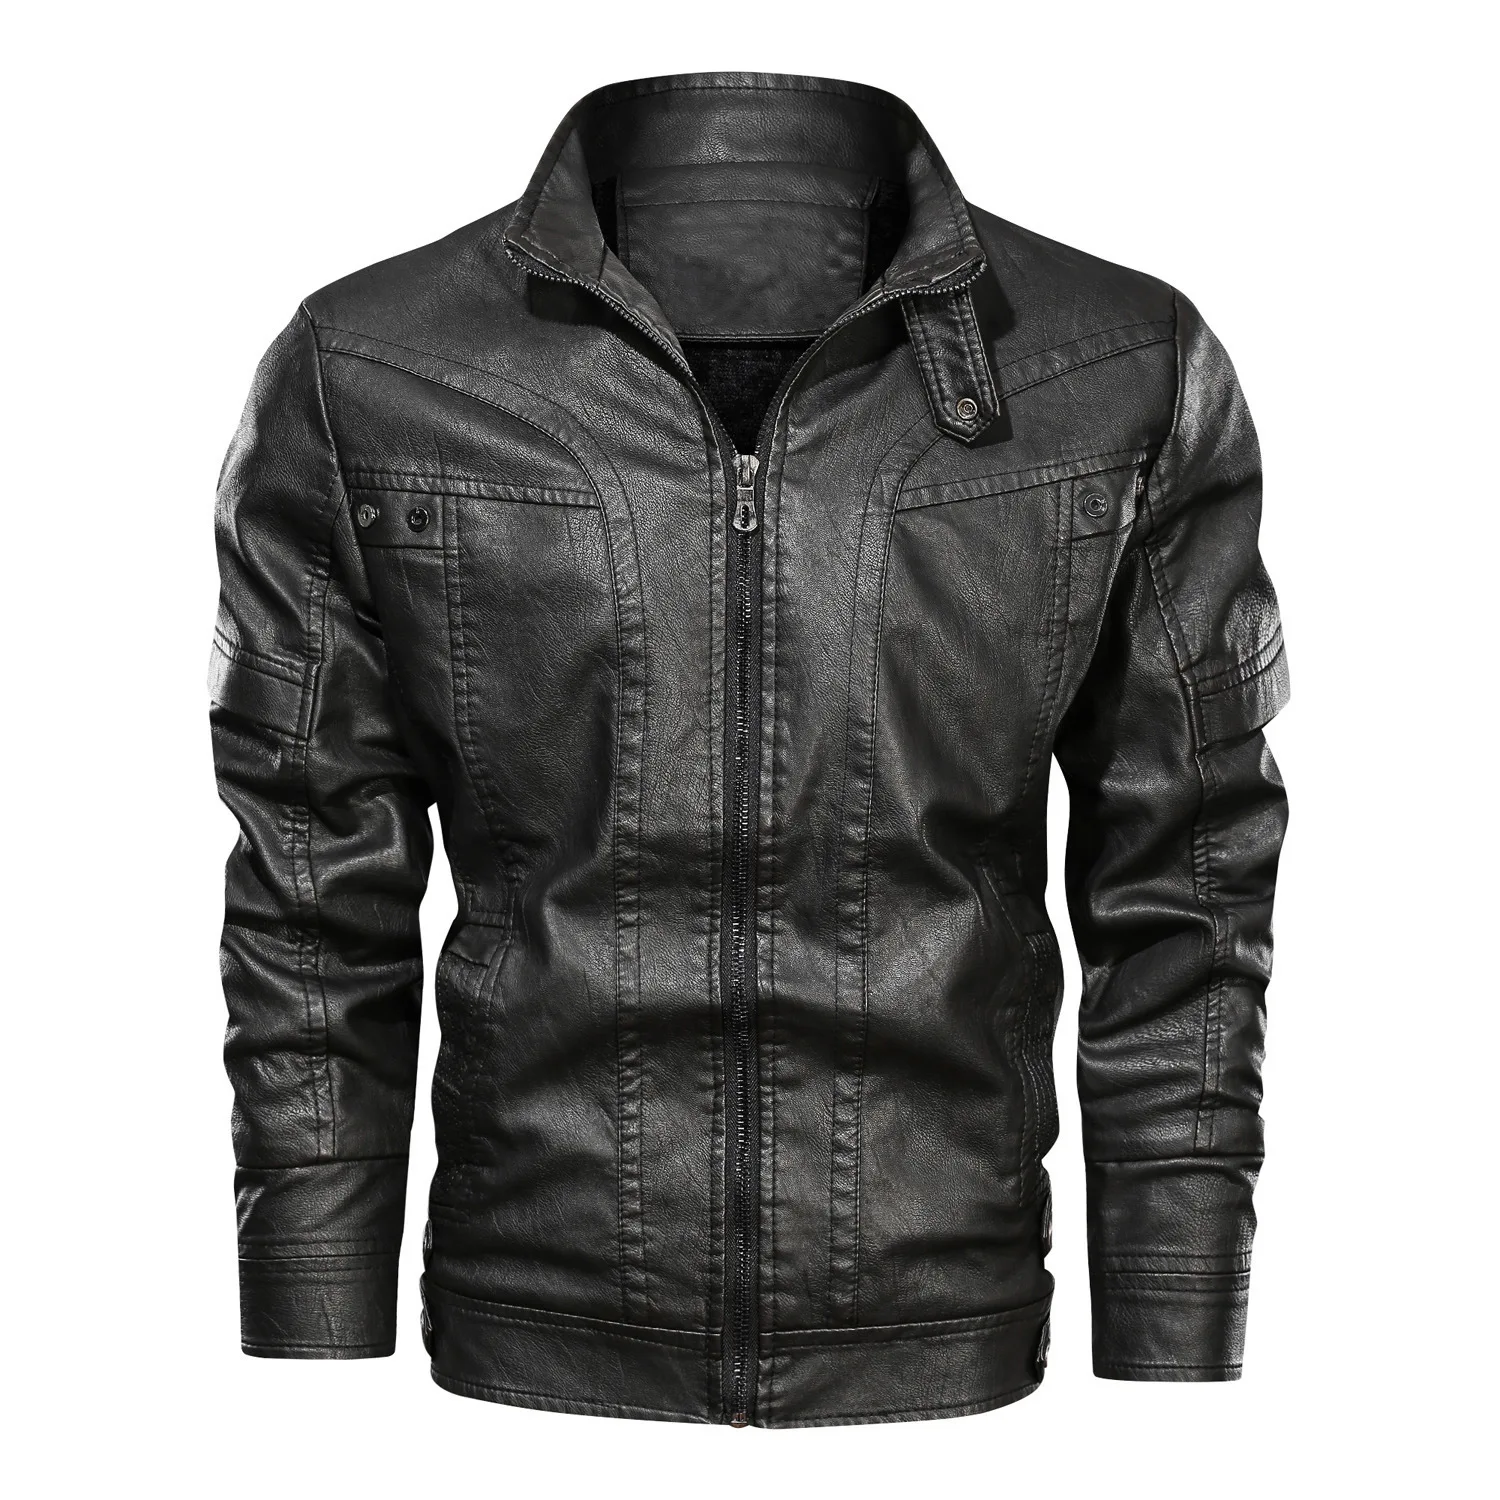 New Men's Leather Jackets Autumn Casual Motorcycle PU Jacket Biker Leather Coats Brand Clothing EU Size